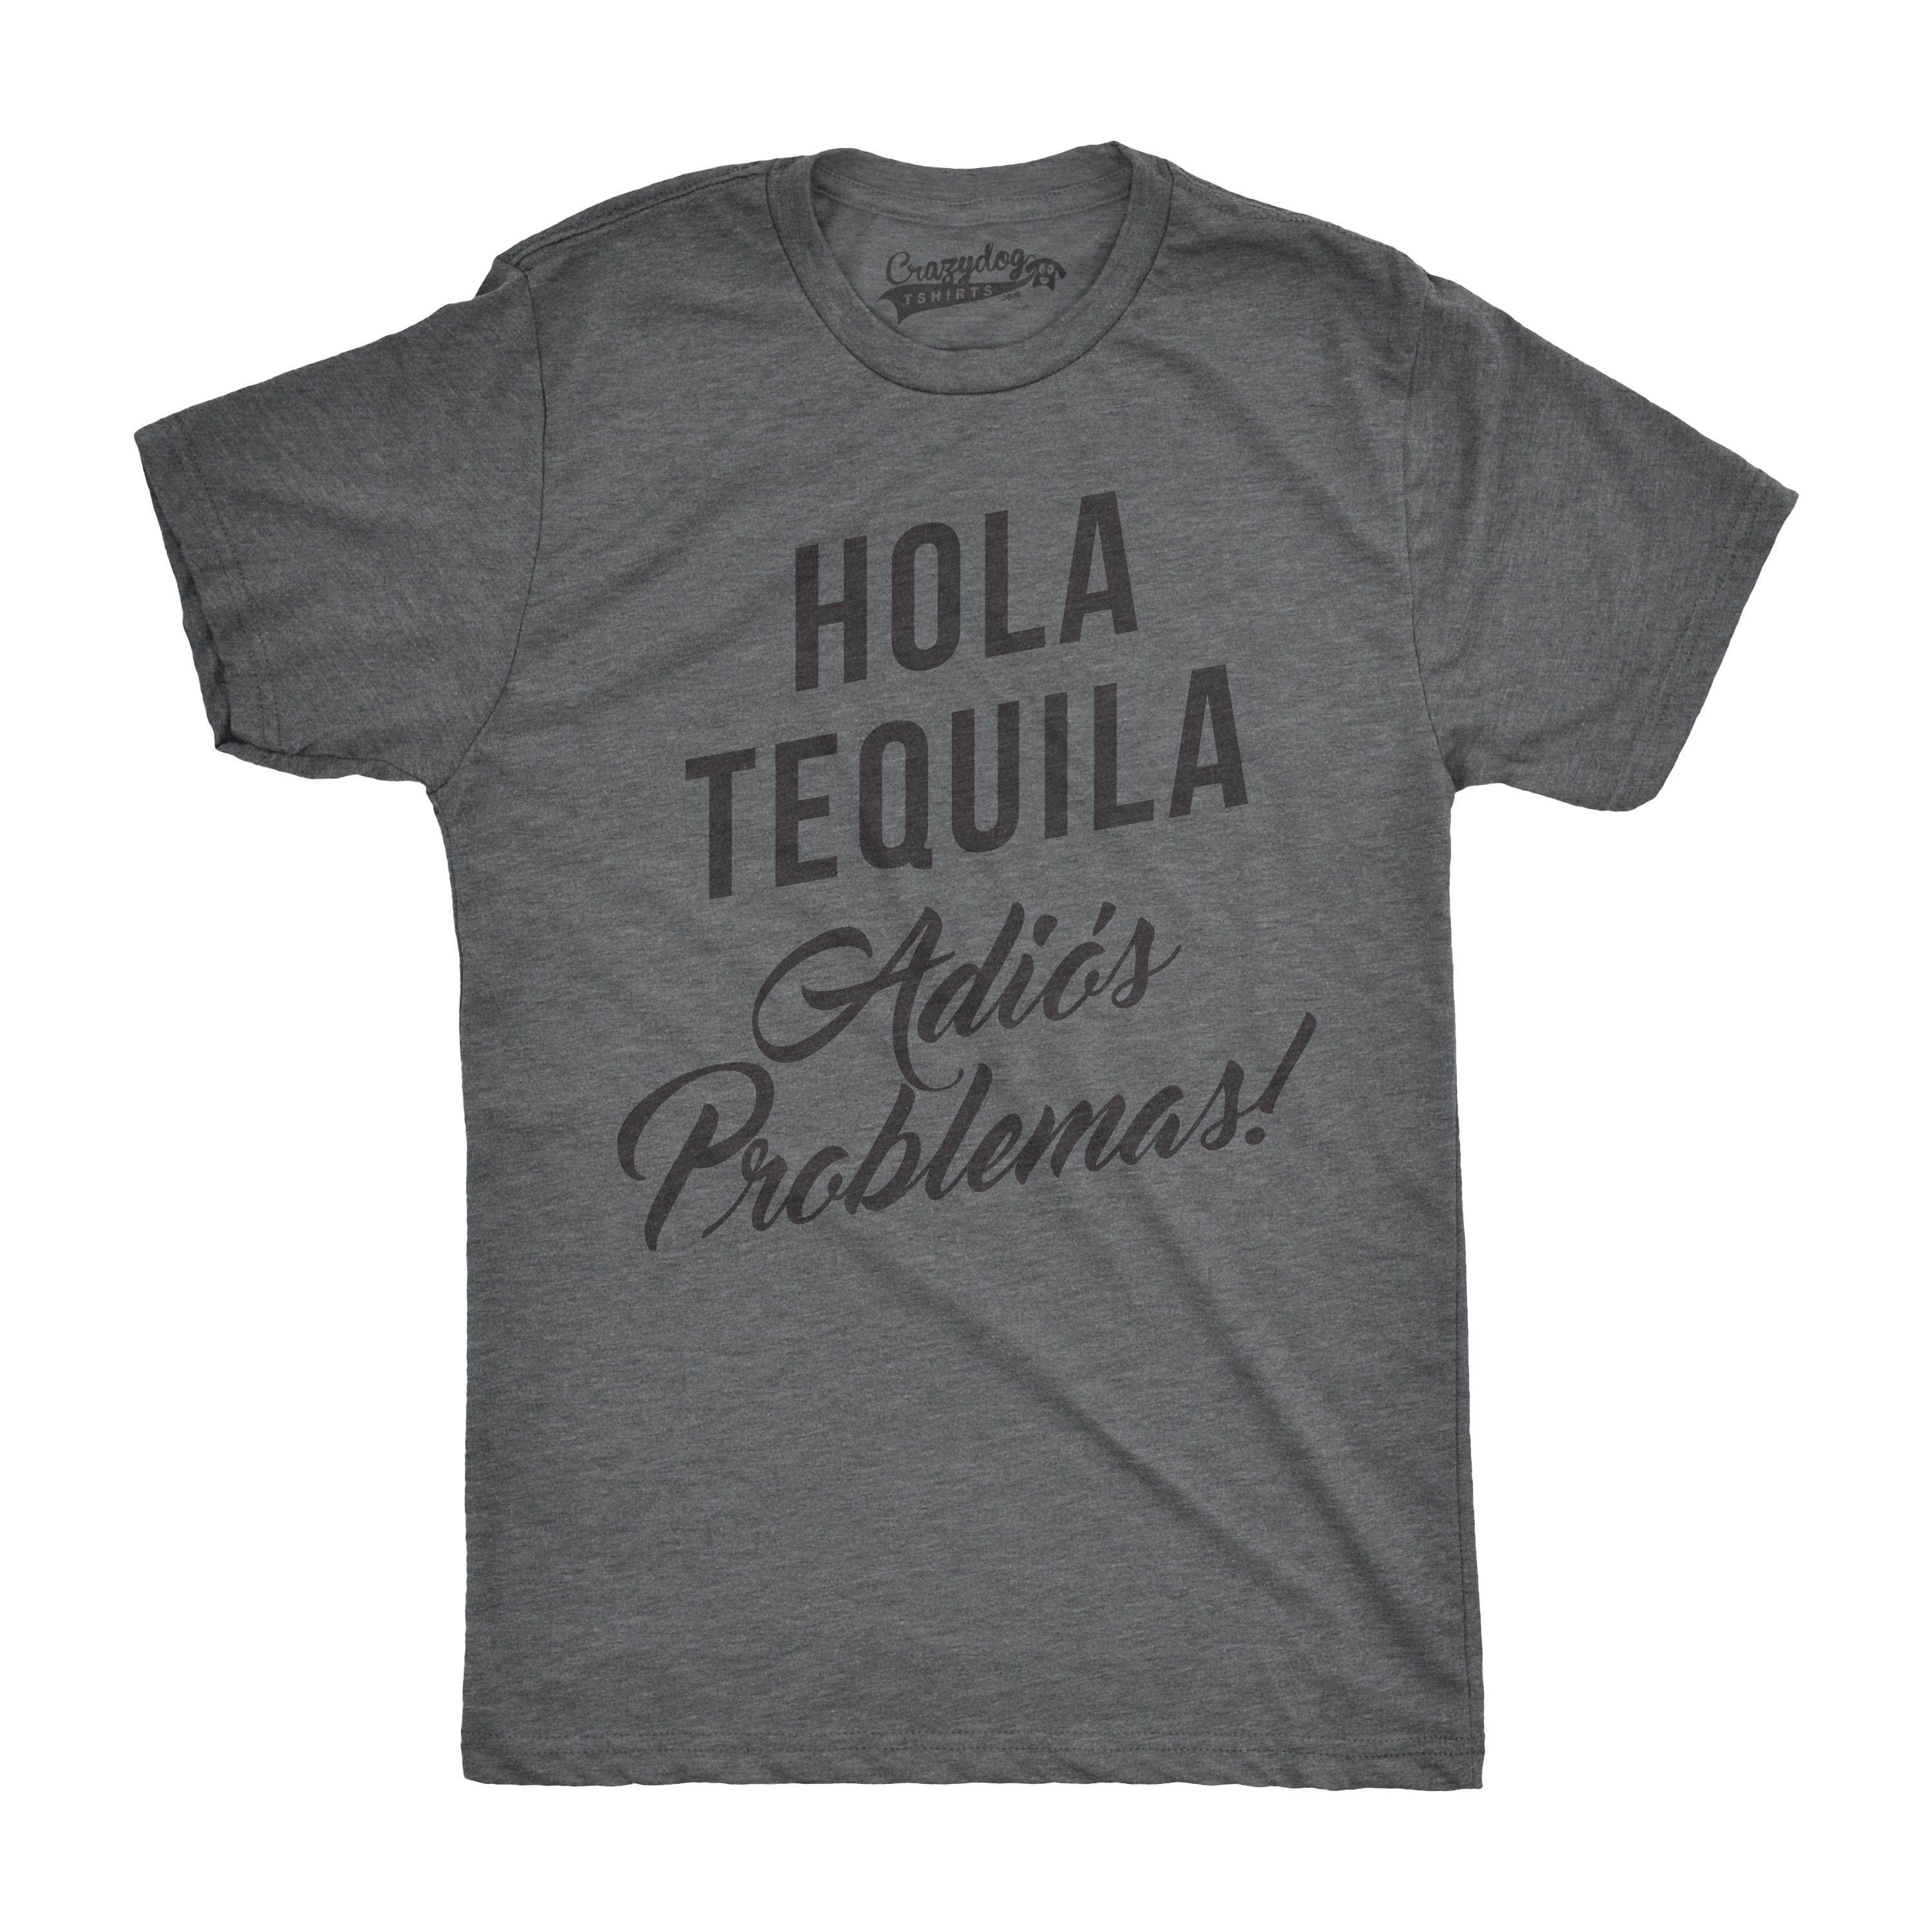 Crazy Dog Tshirts Mens Hola Tequila Adios Problemas Funny Shirts Hilarious Vintage Novelty T shirt